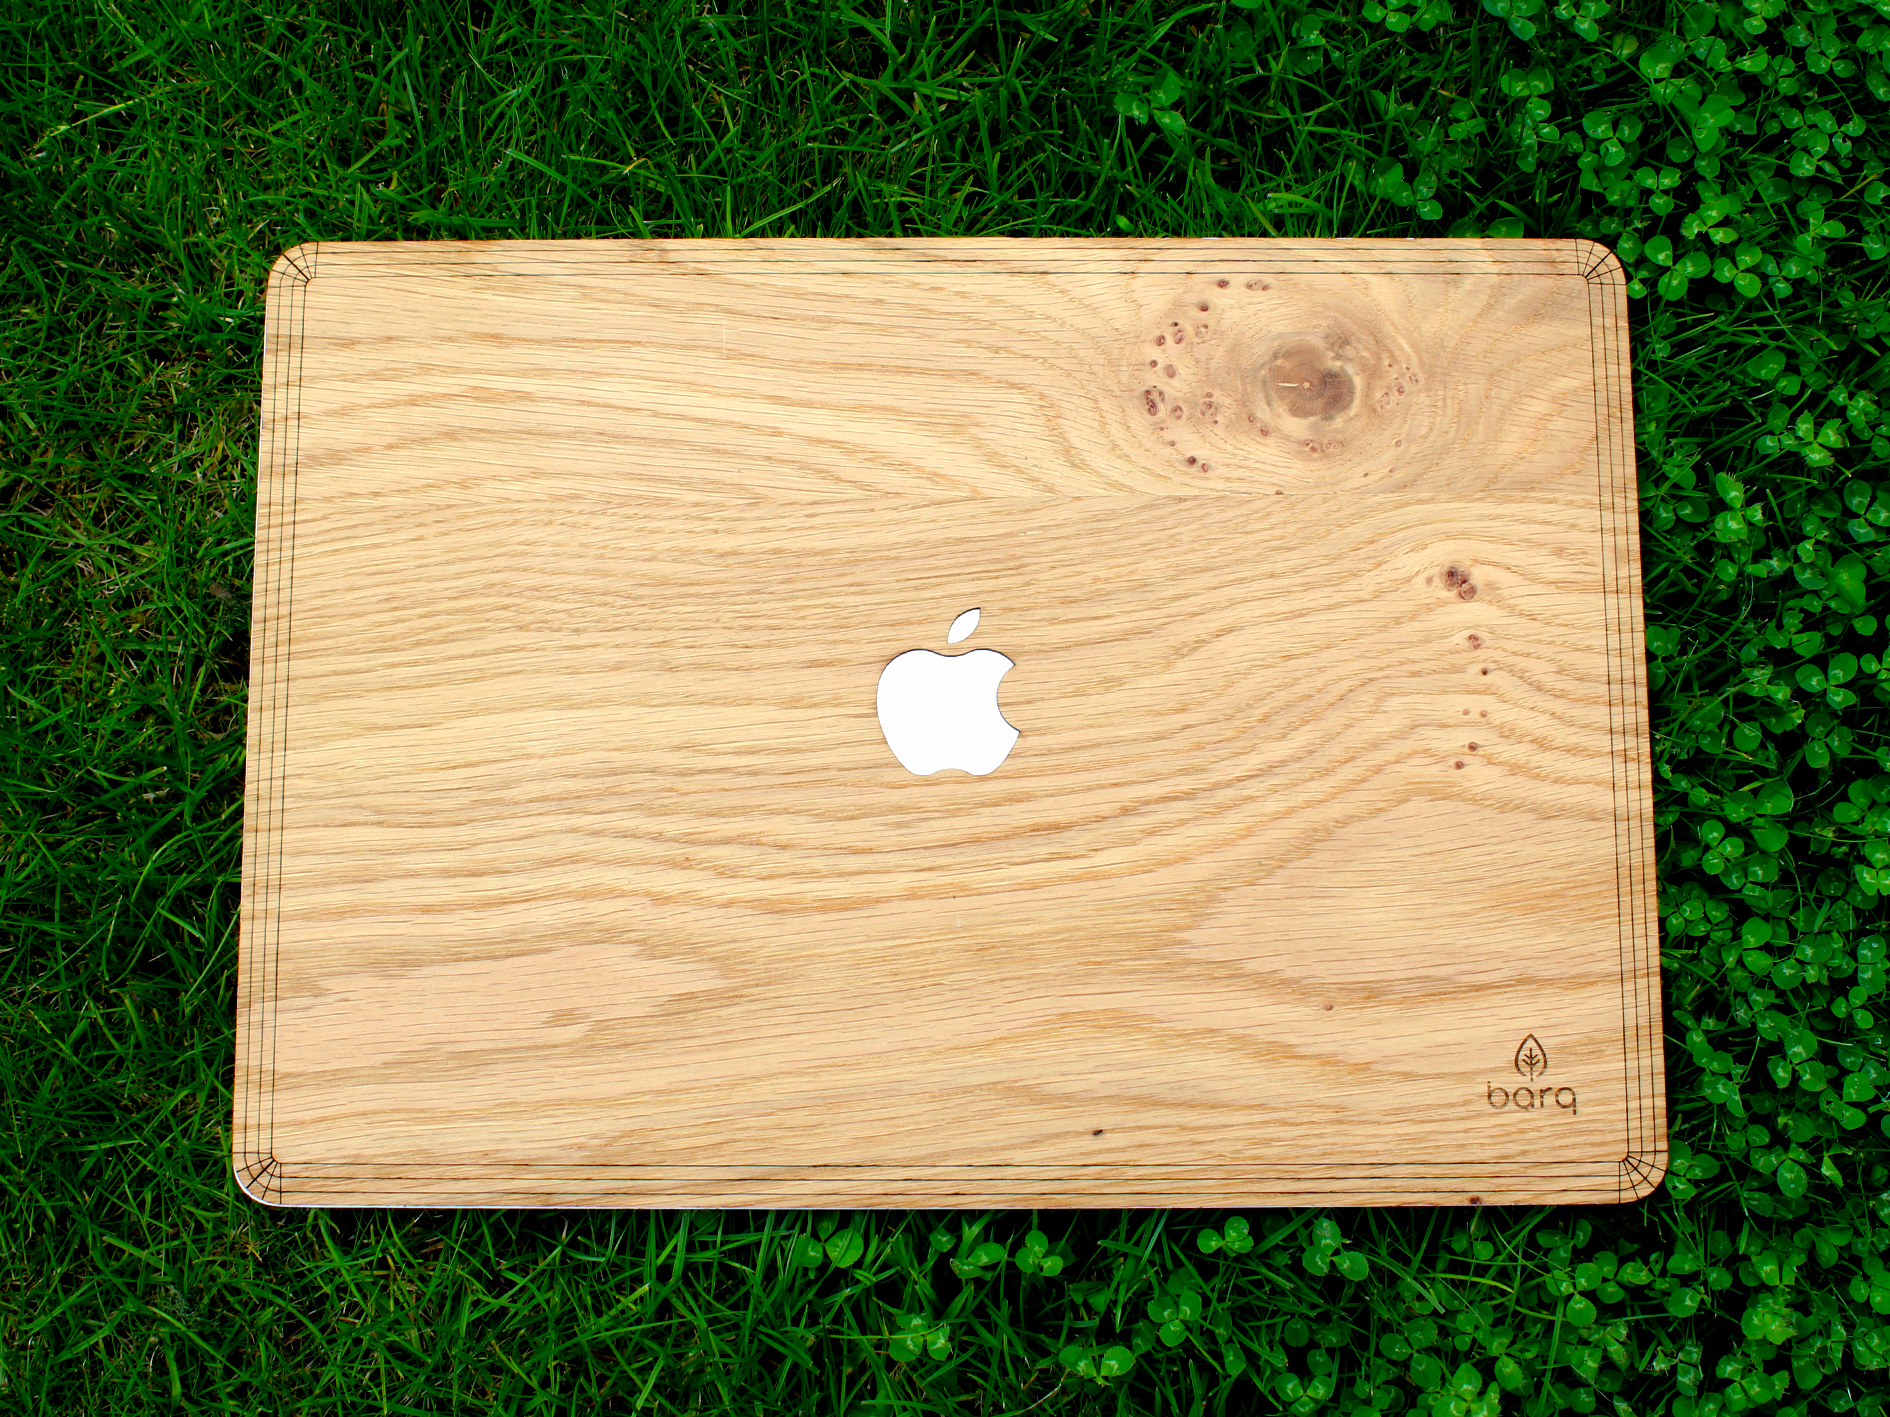 Oak - MacBook Skin Made From Real Wood-Barqwood